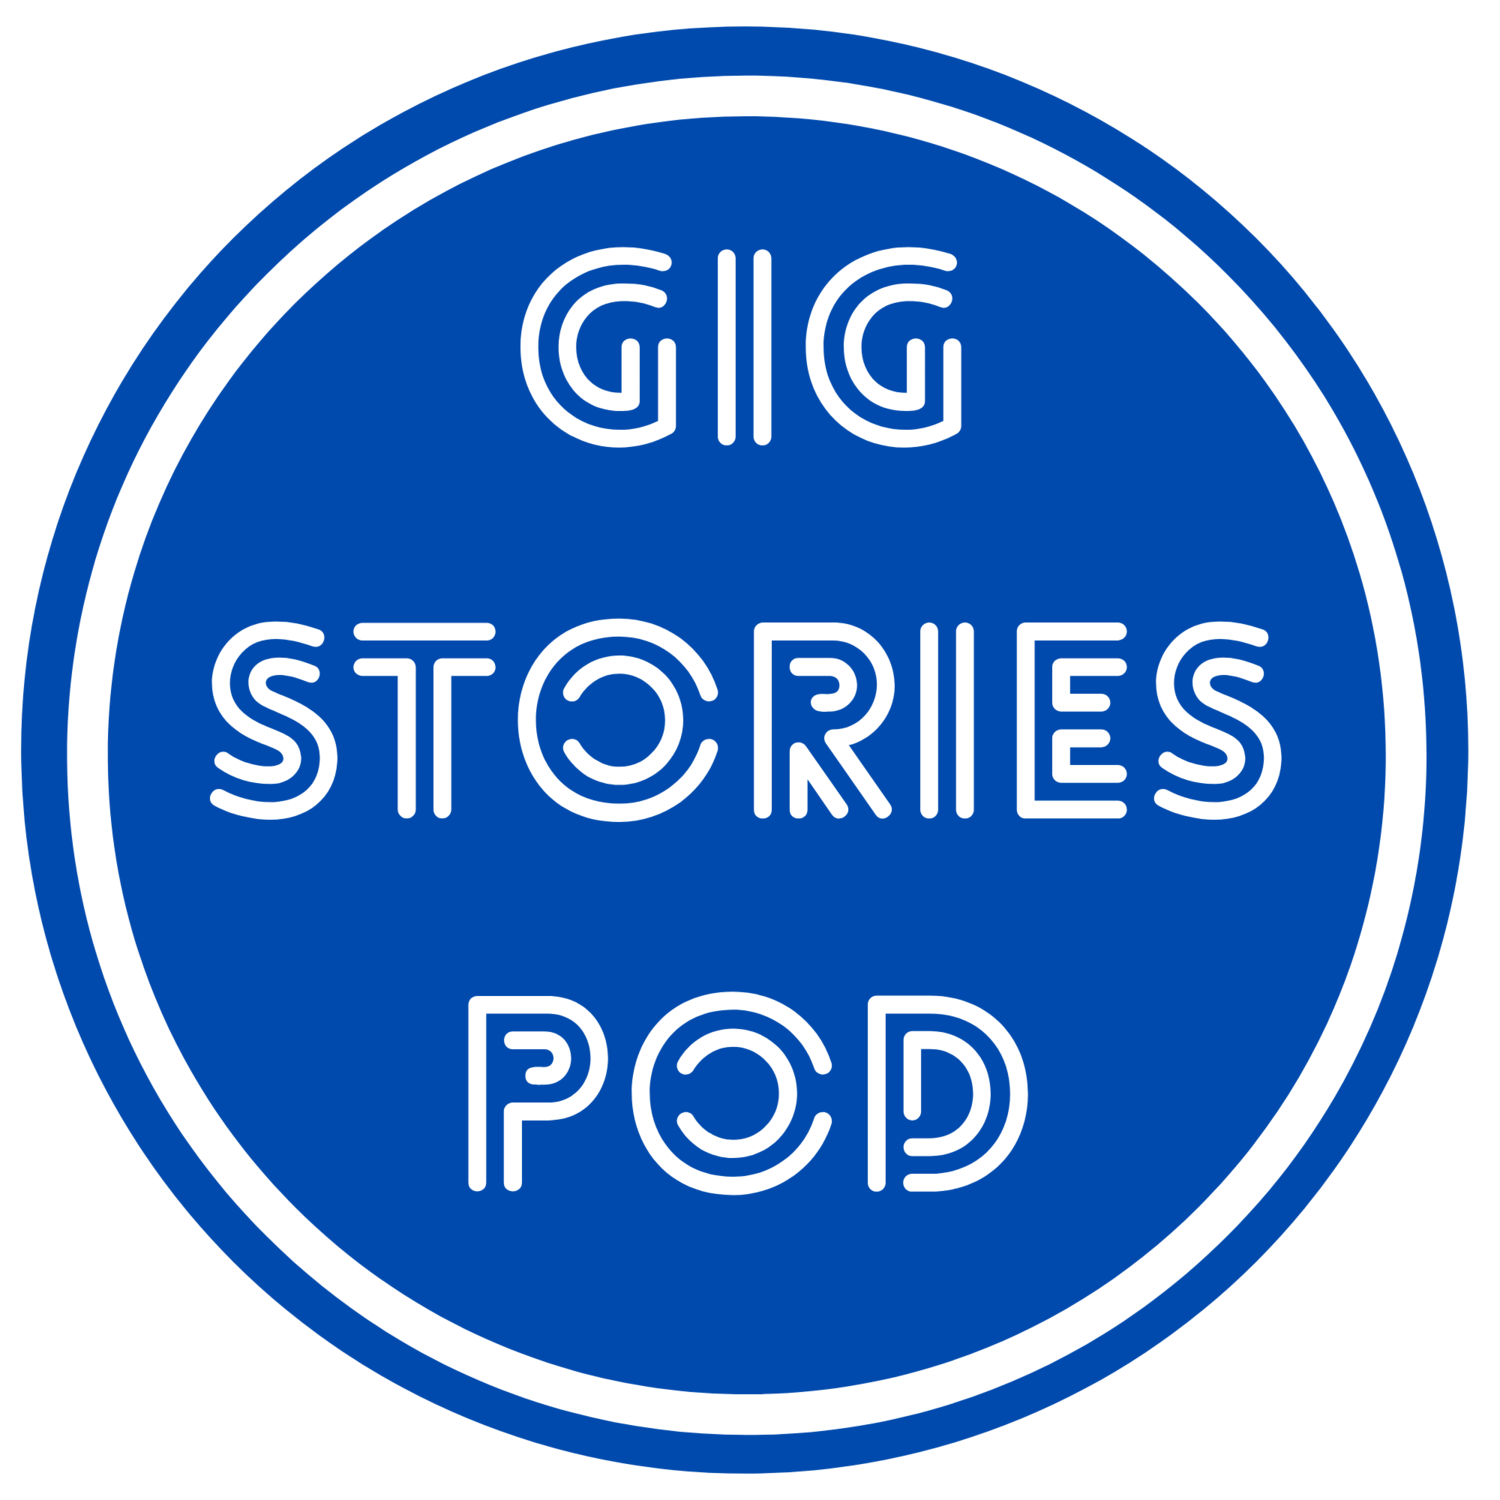 Gig Stories Podcast